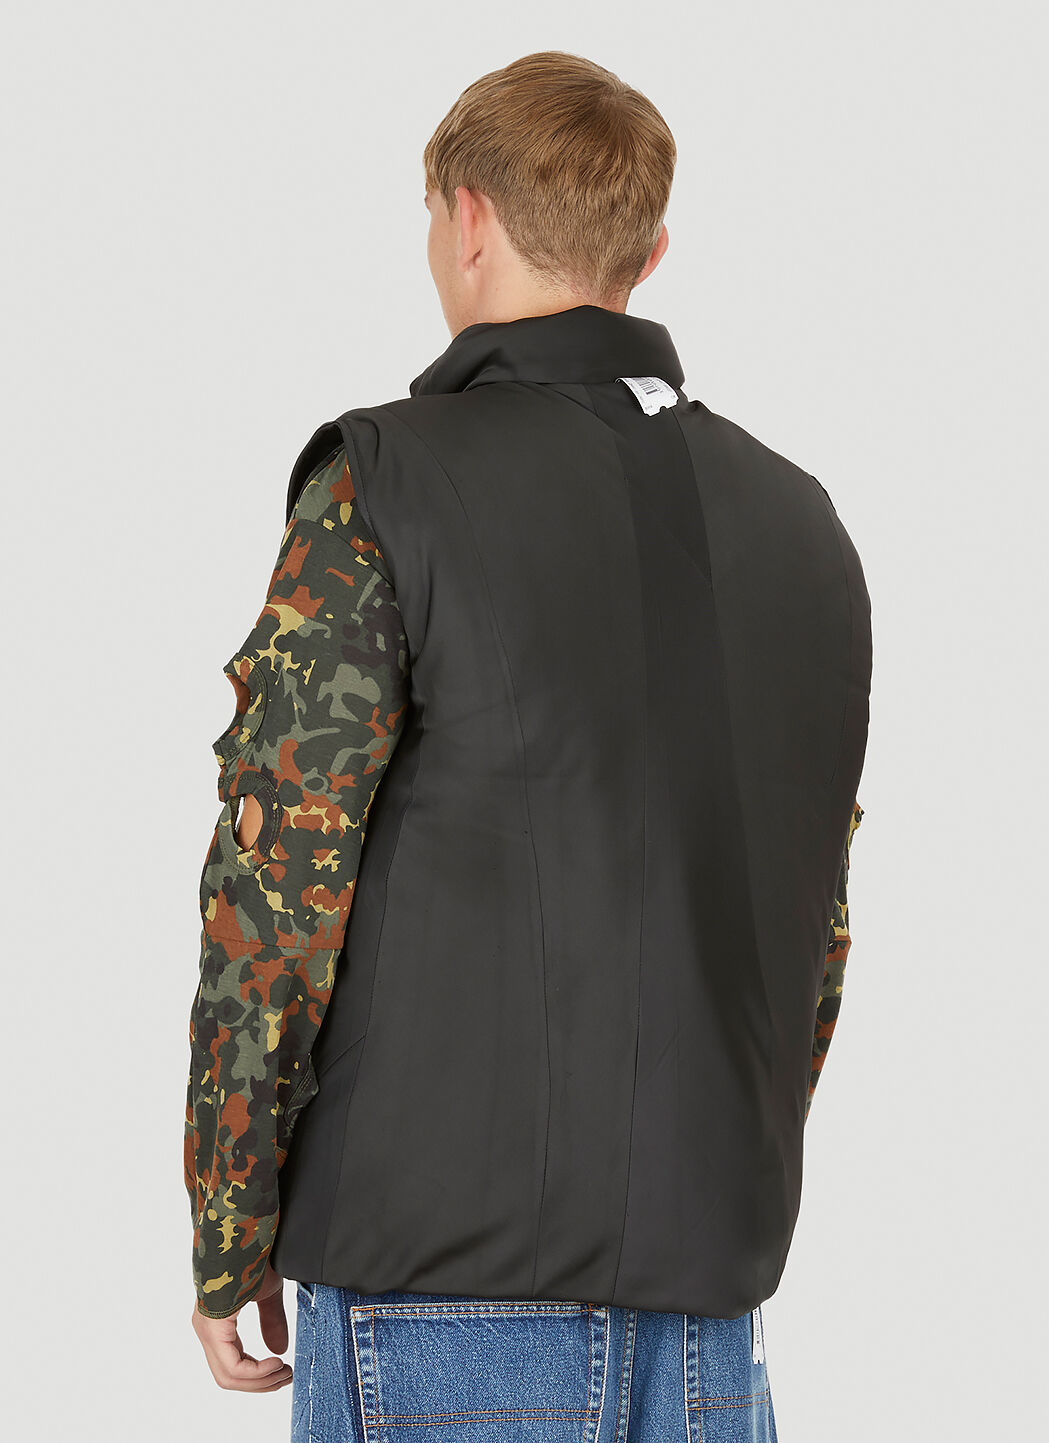 PROTOTYPES Tie Puffer Sleeveless Jacket in Black | LN-CC®